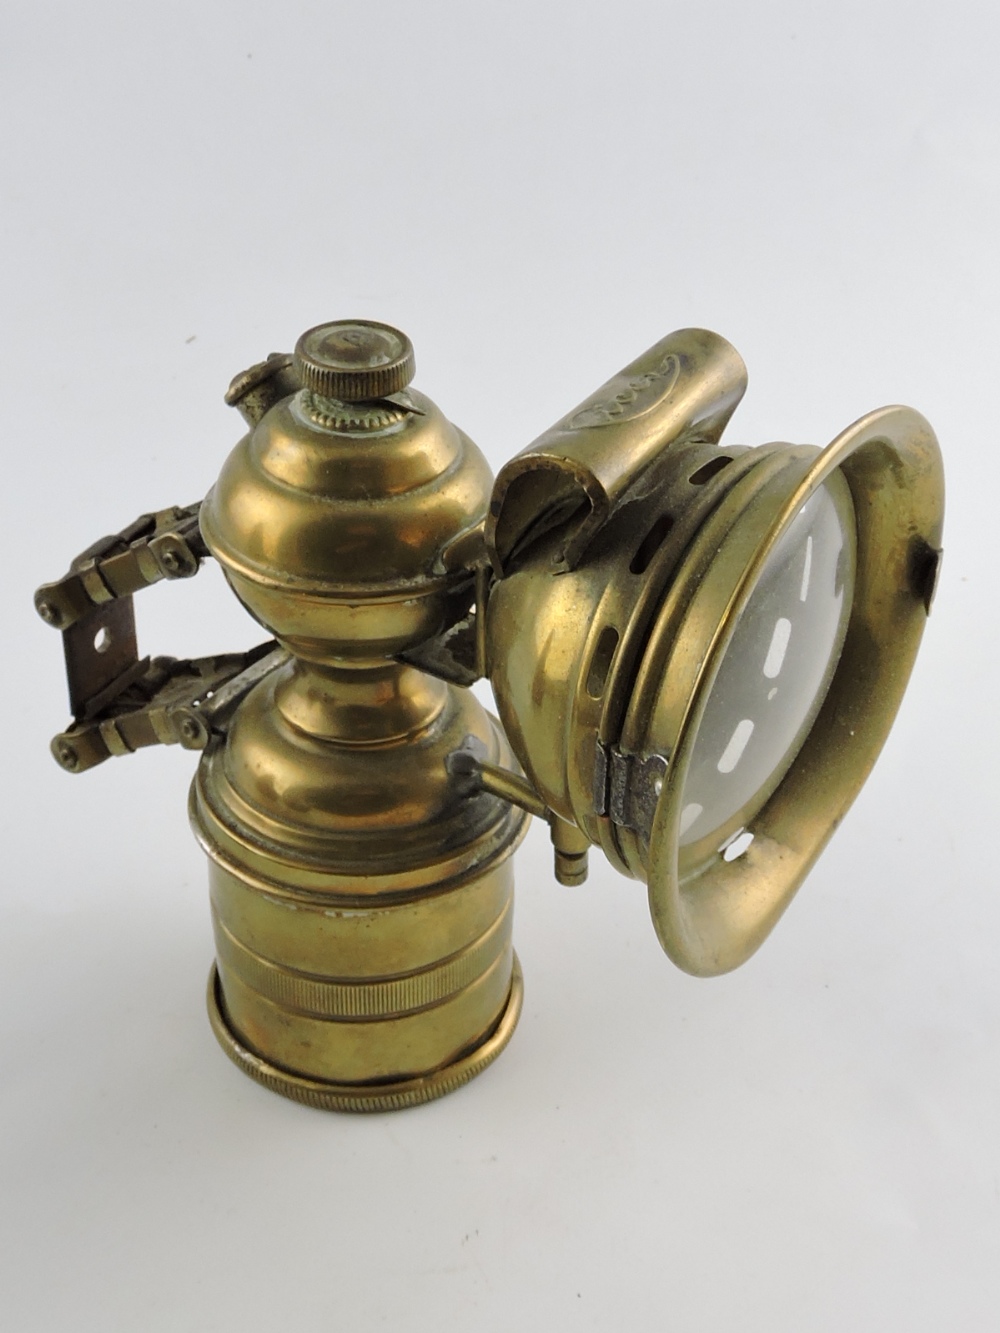 An early 20th century brass acetylene cy